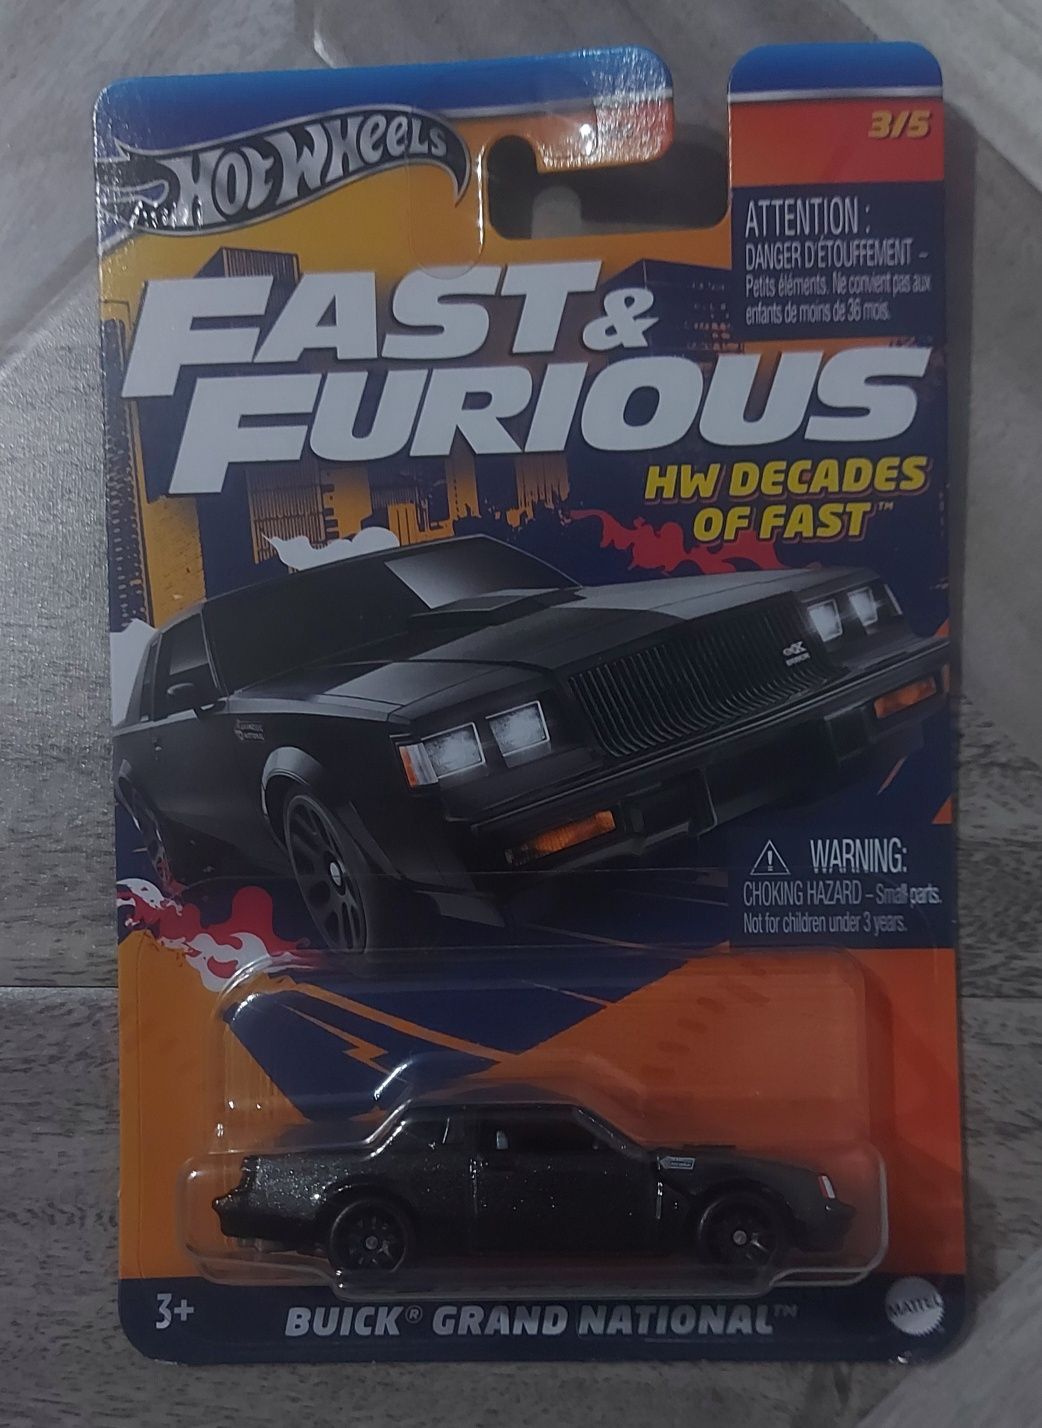 Full Set HotWheels Fast&Furious (HW Decades Of Fast)